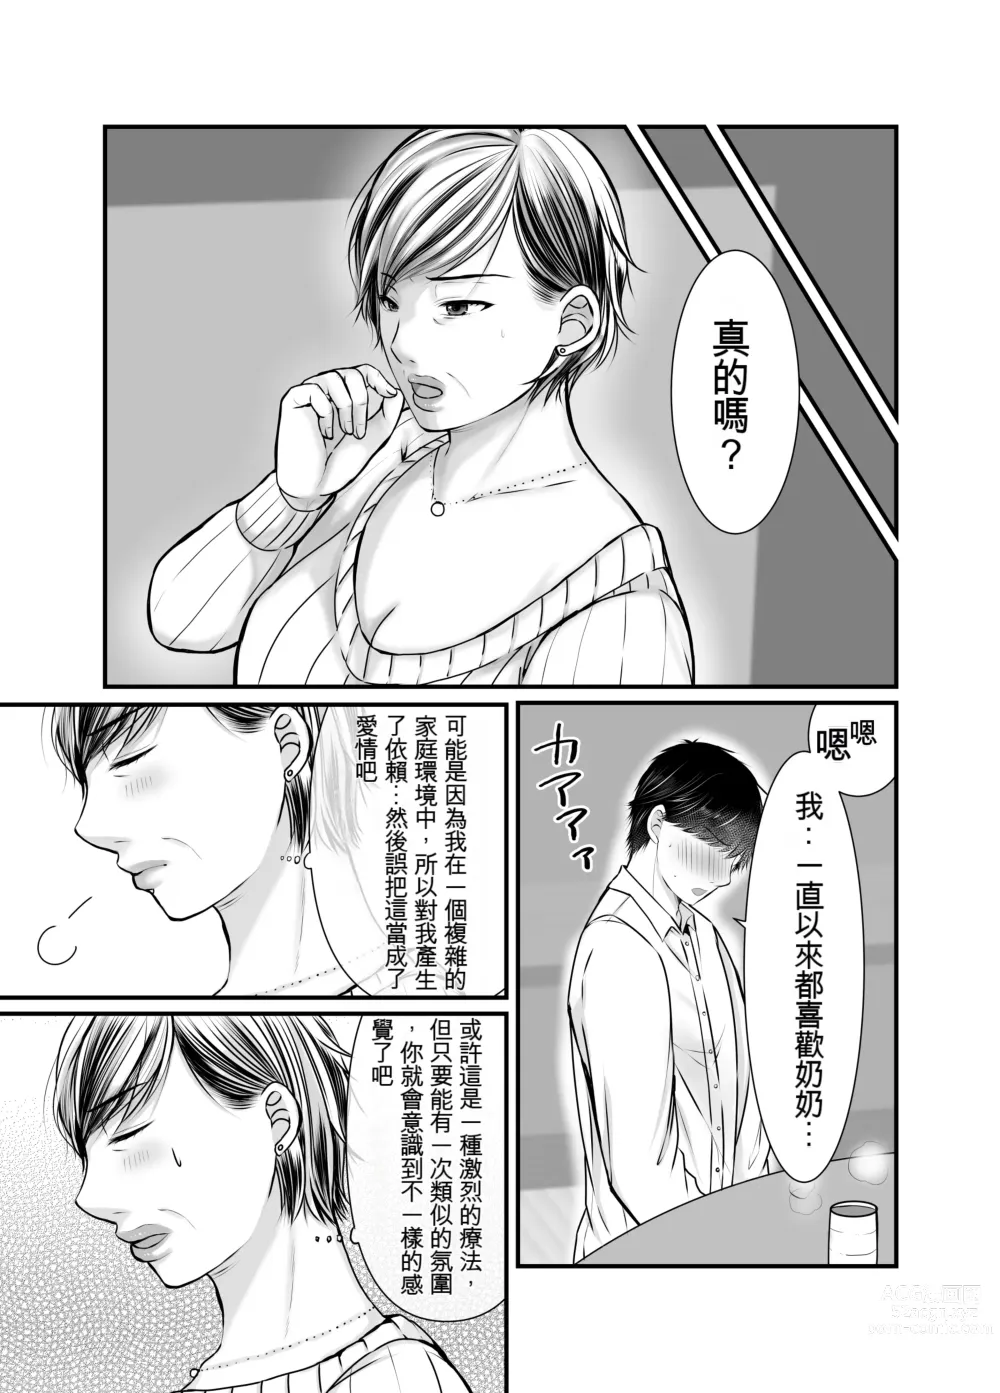 Page 7 of manga 祖母與孫子 ~孫子的第一次被內射的那一天~